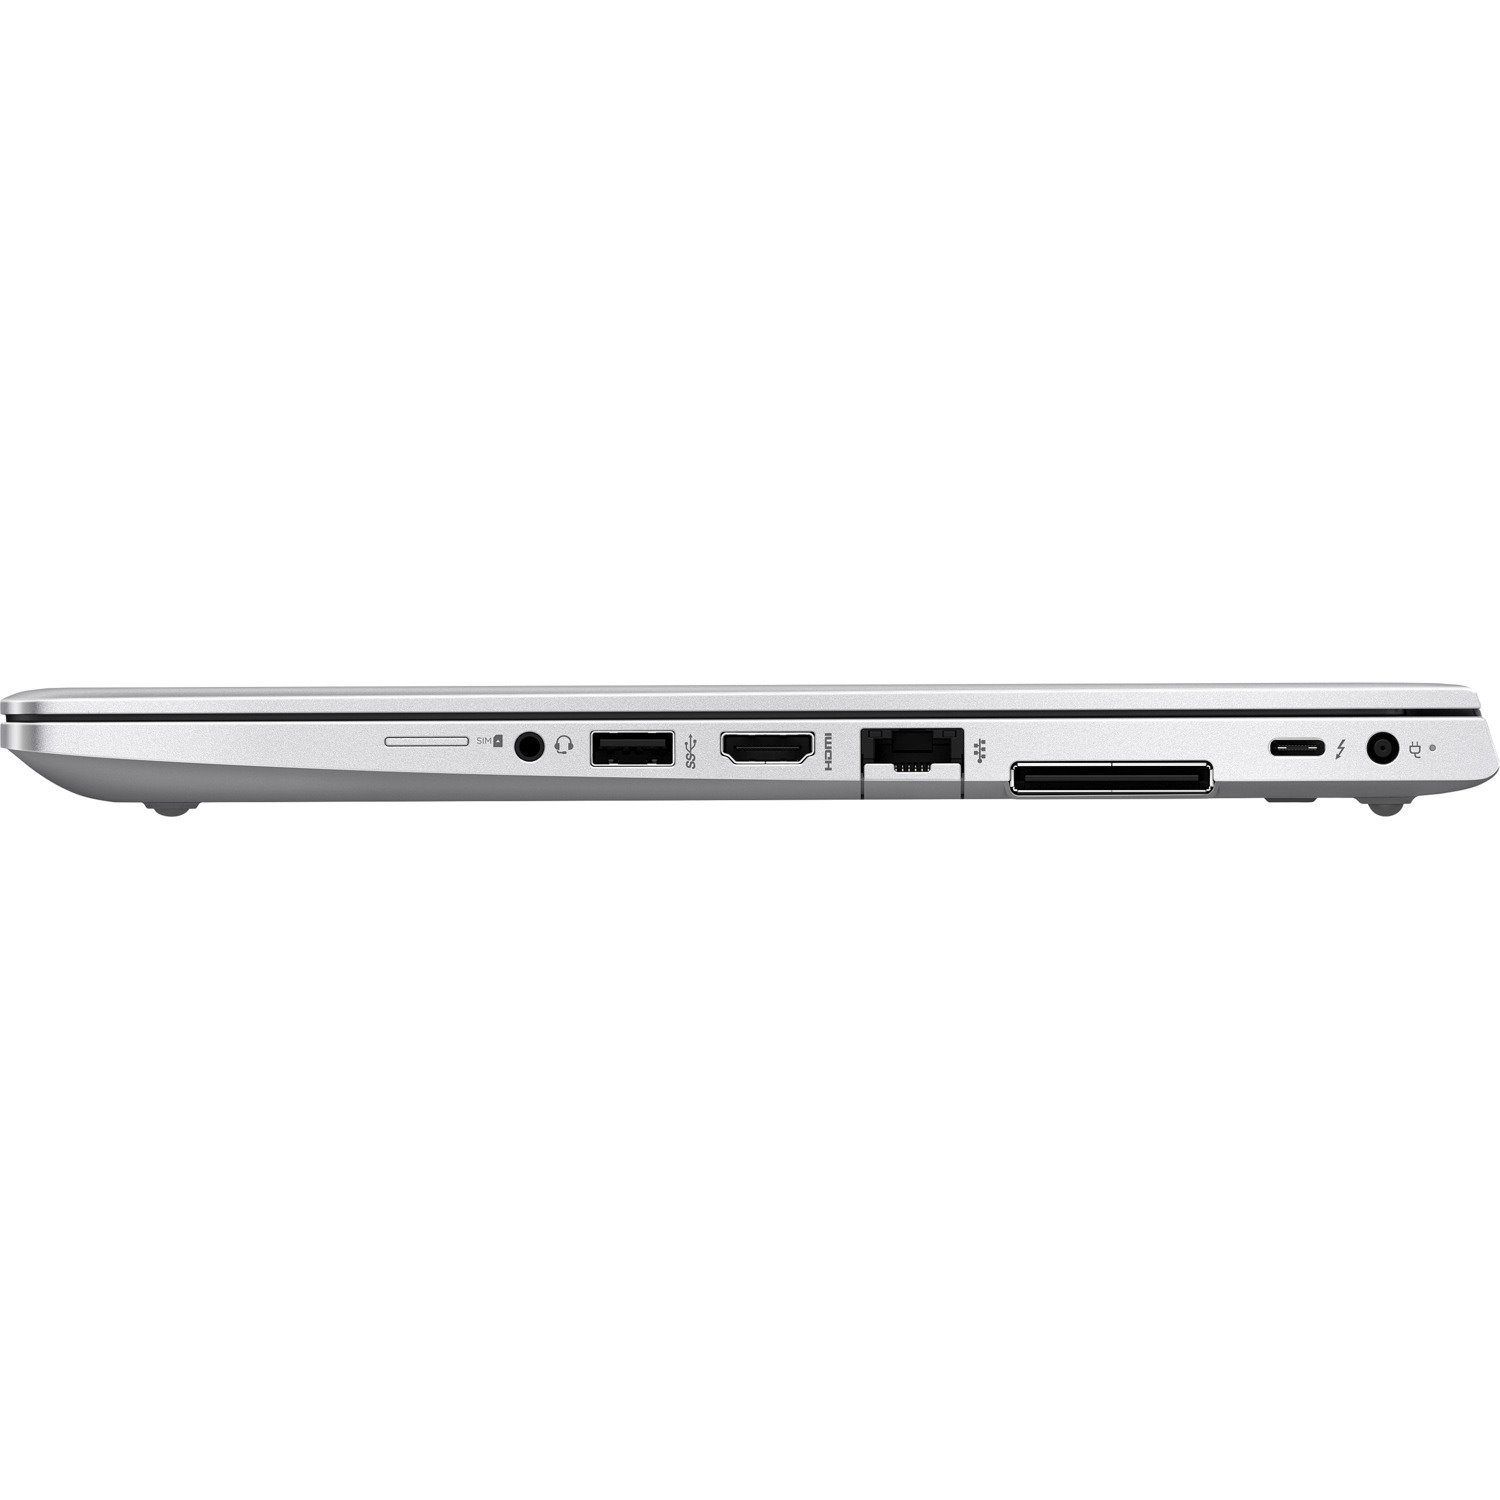 HP EliteBook x360 830 G6 13.3" Touchscreen Convertible 2 in 1 Notebook - Intel Core i5 8th Gen i5-8265U - 8 GB - 256 GB SSD